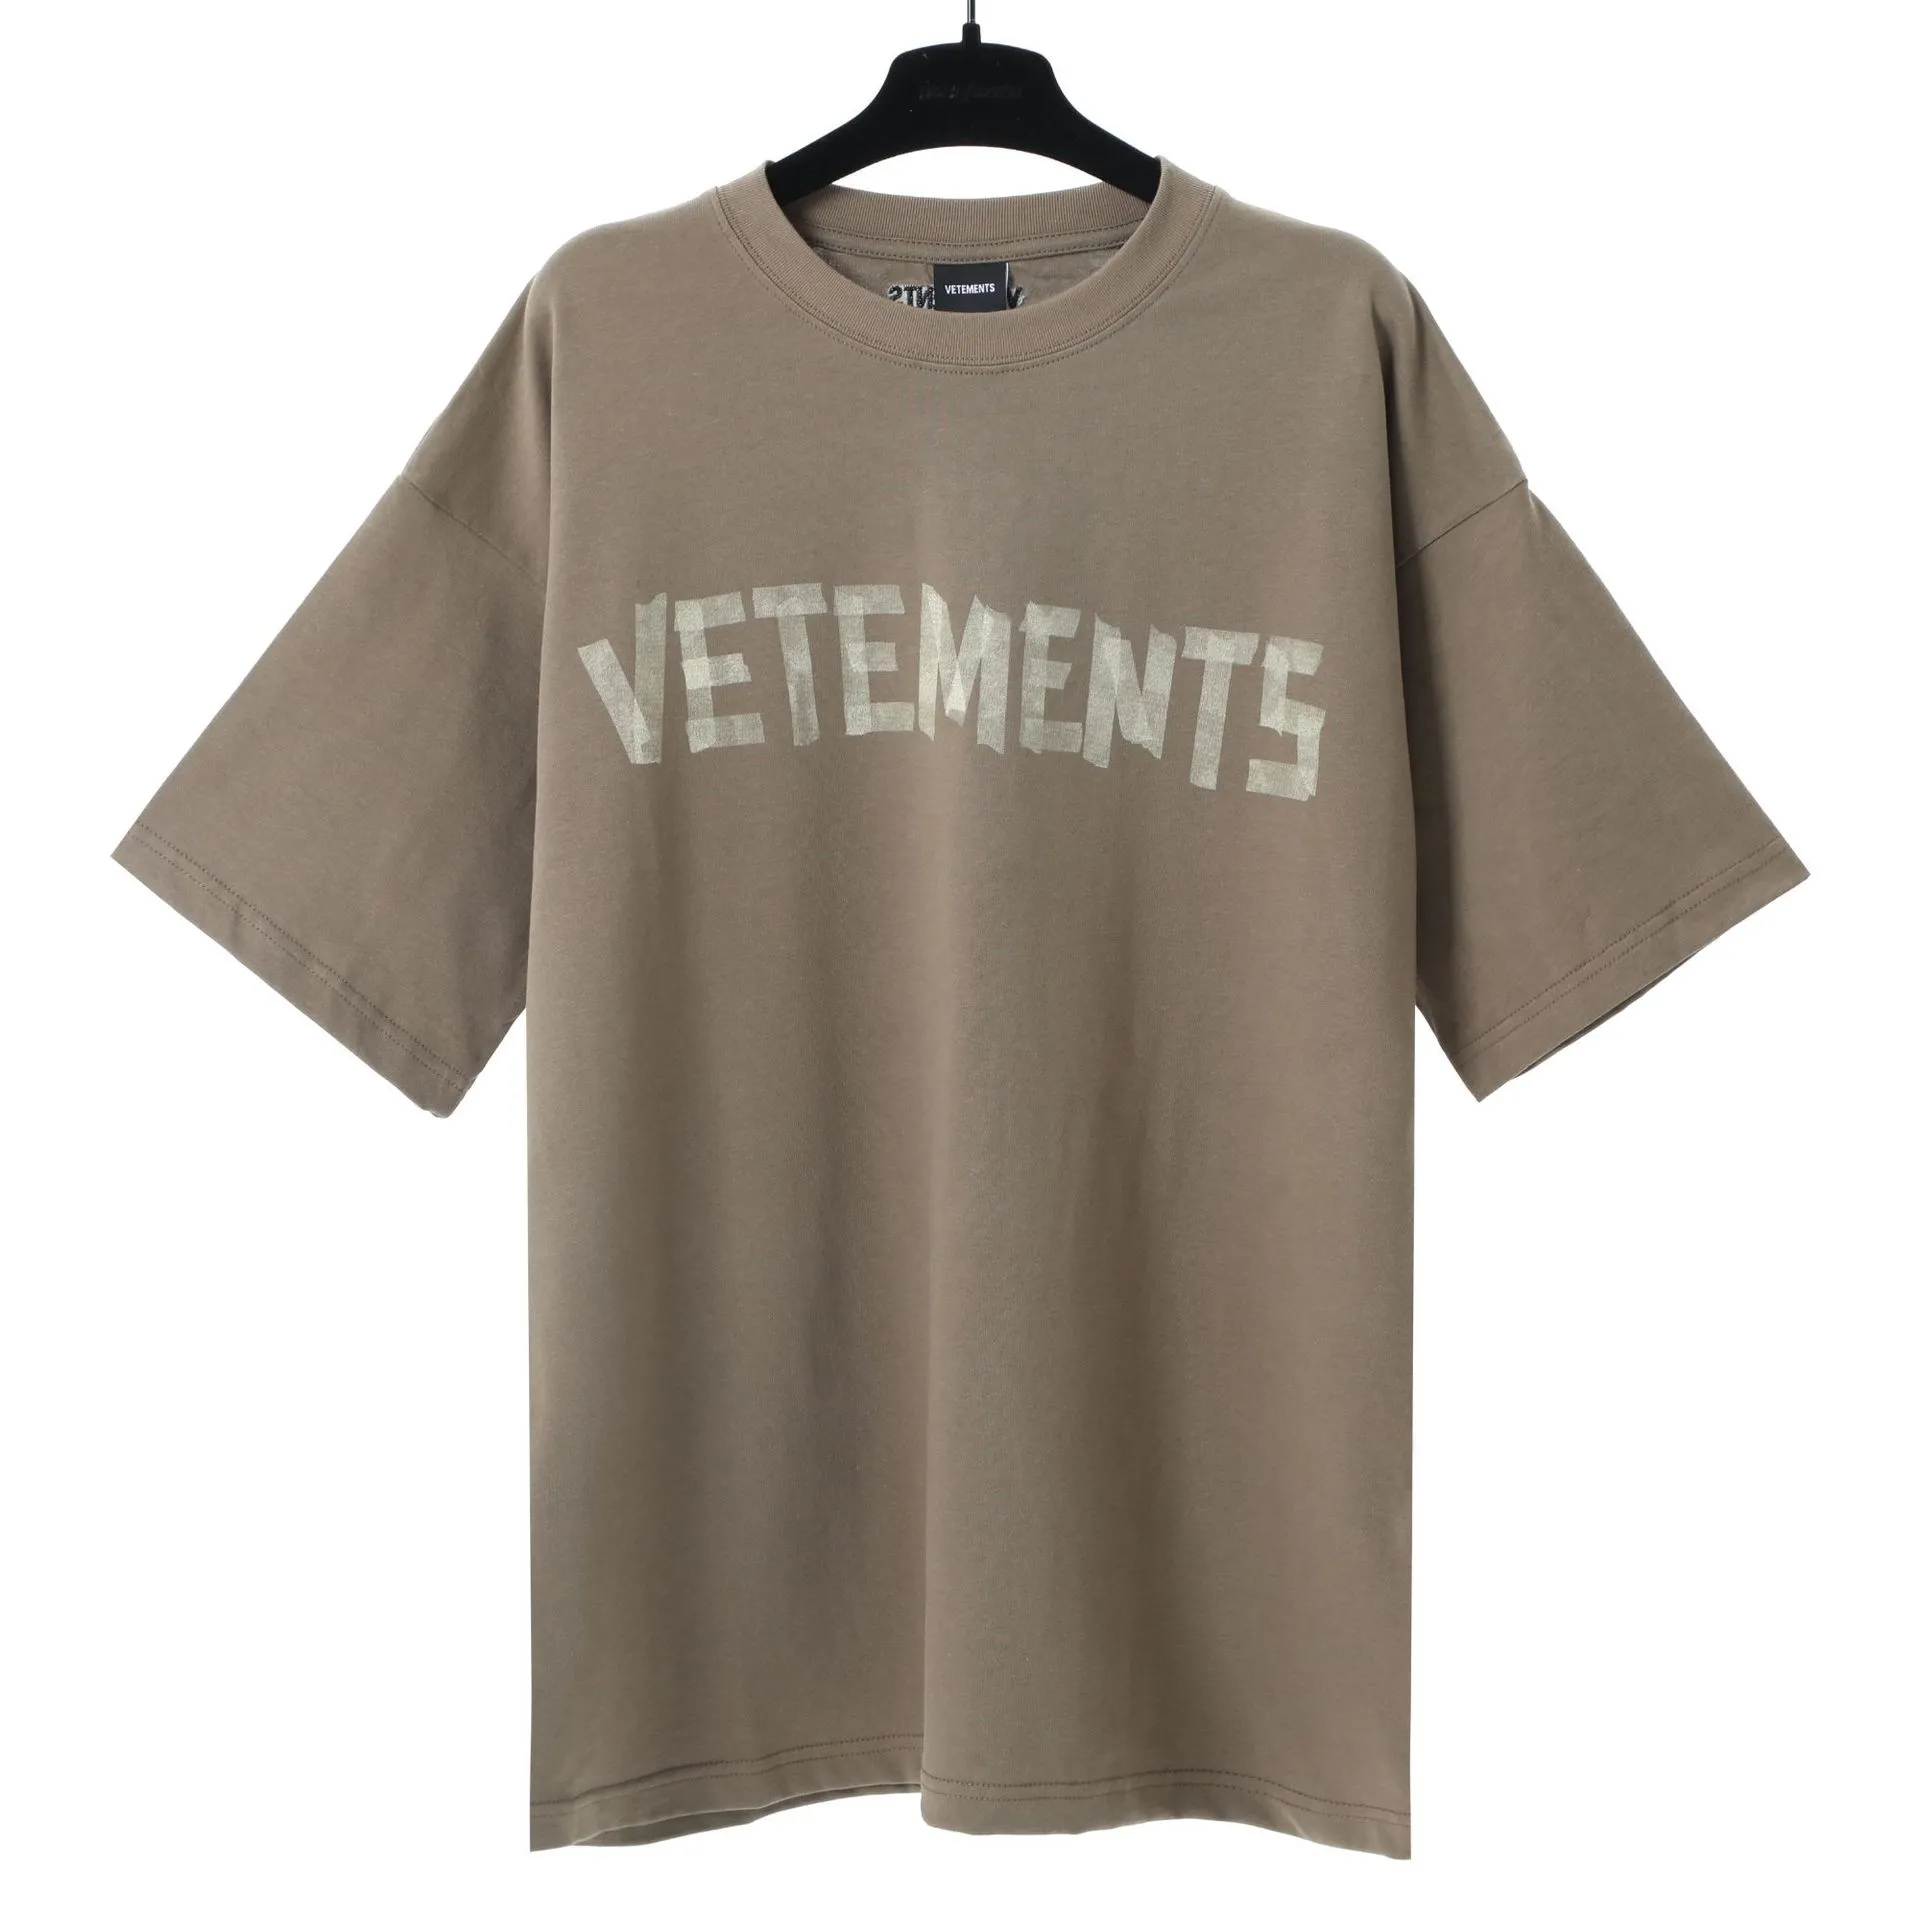 Vetements Letter Printed Tee Black Color Short Sleeves Men Women Summer Casual Hip Hop Street Skateboard T-shirt 5TR